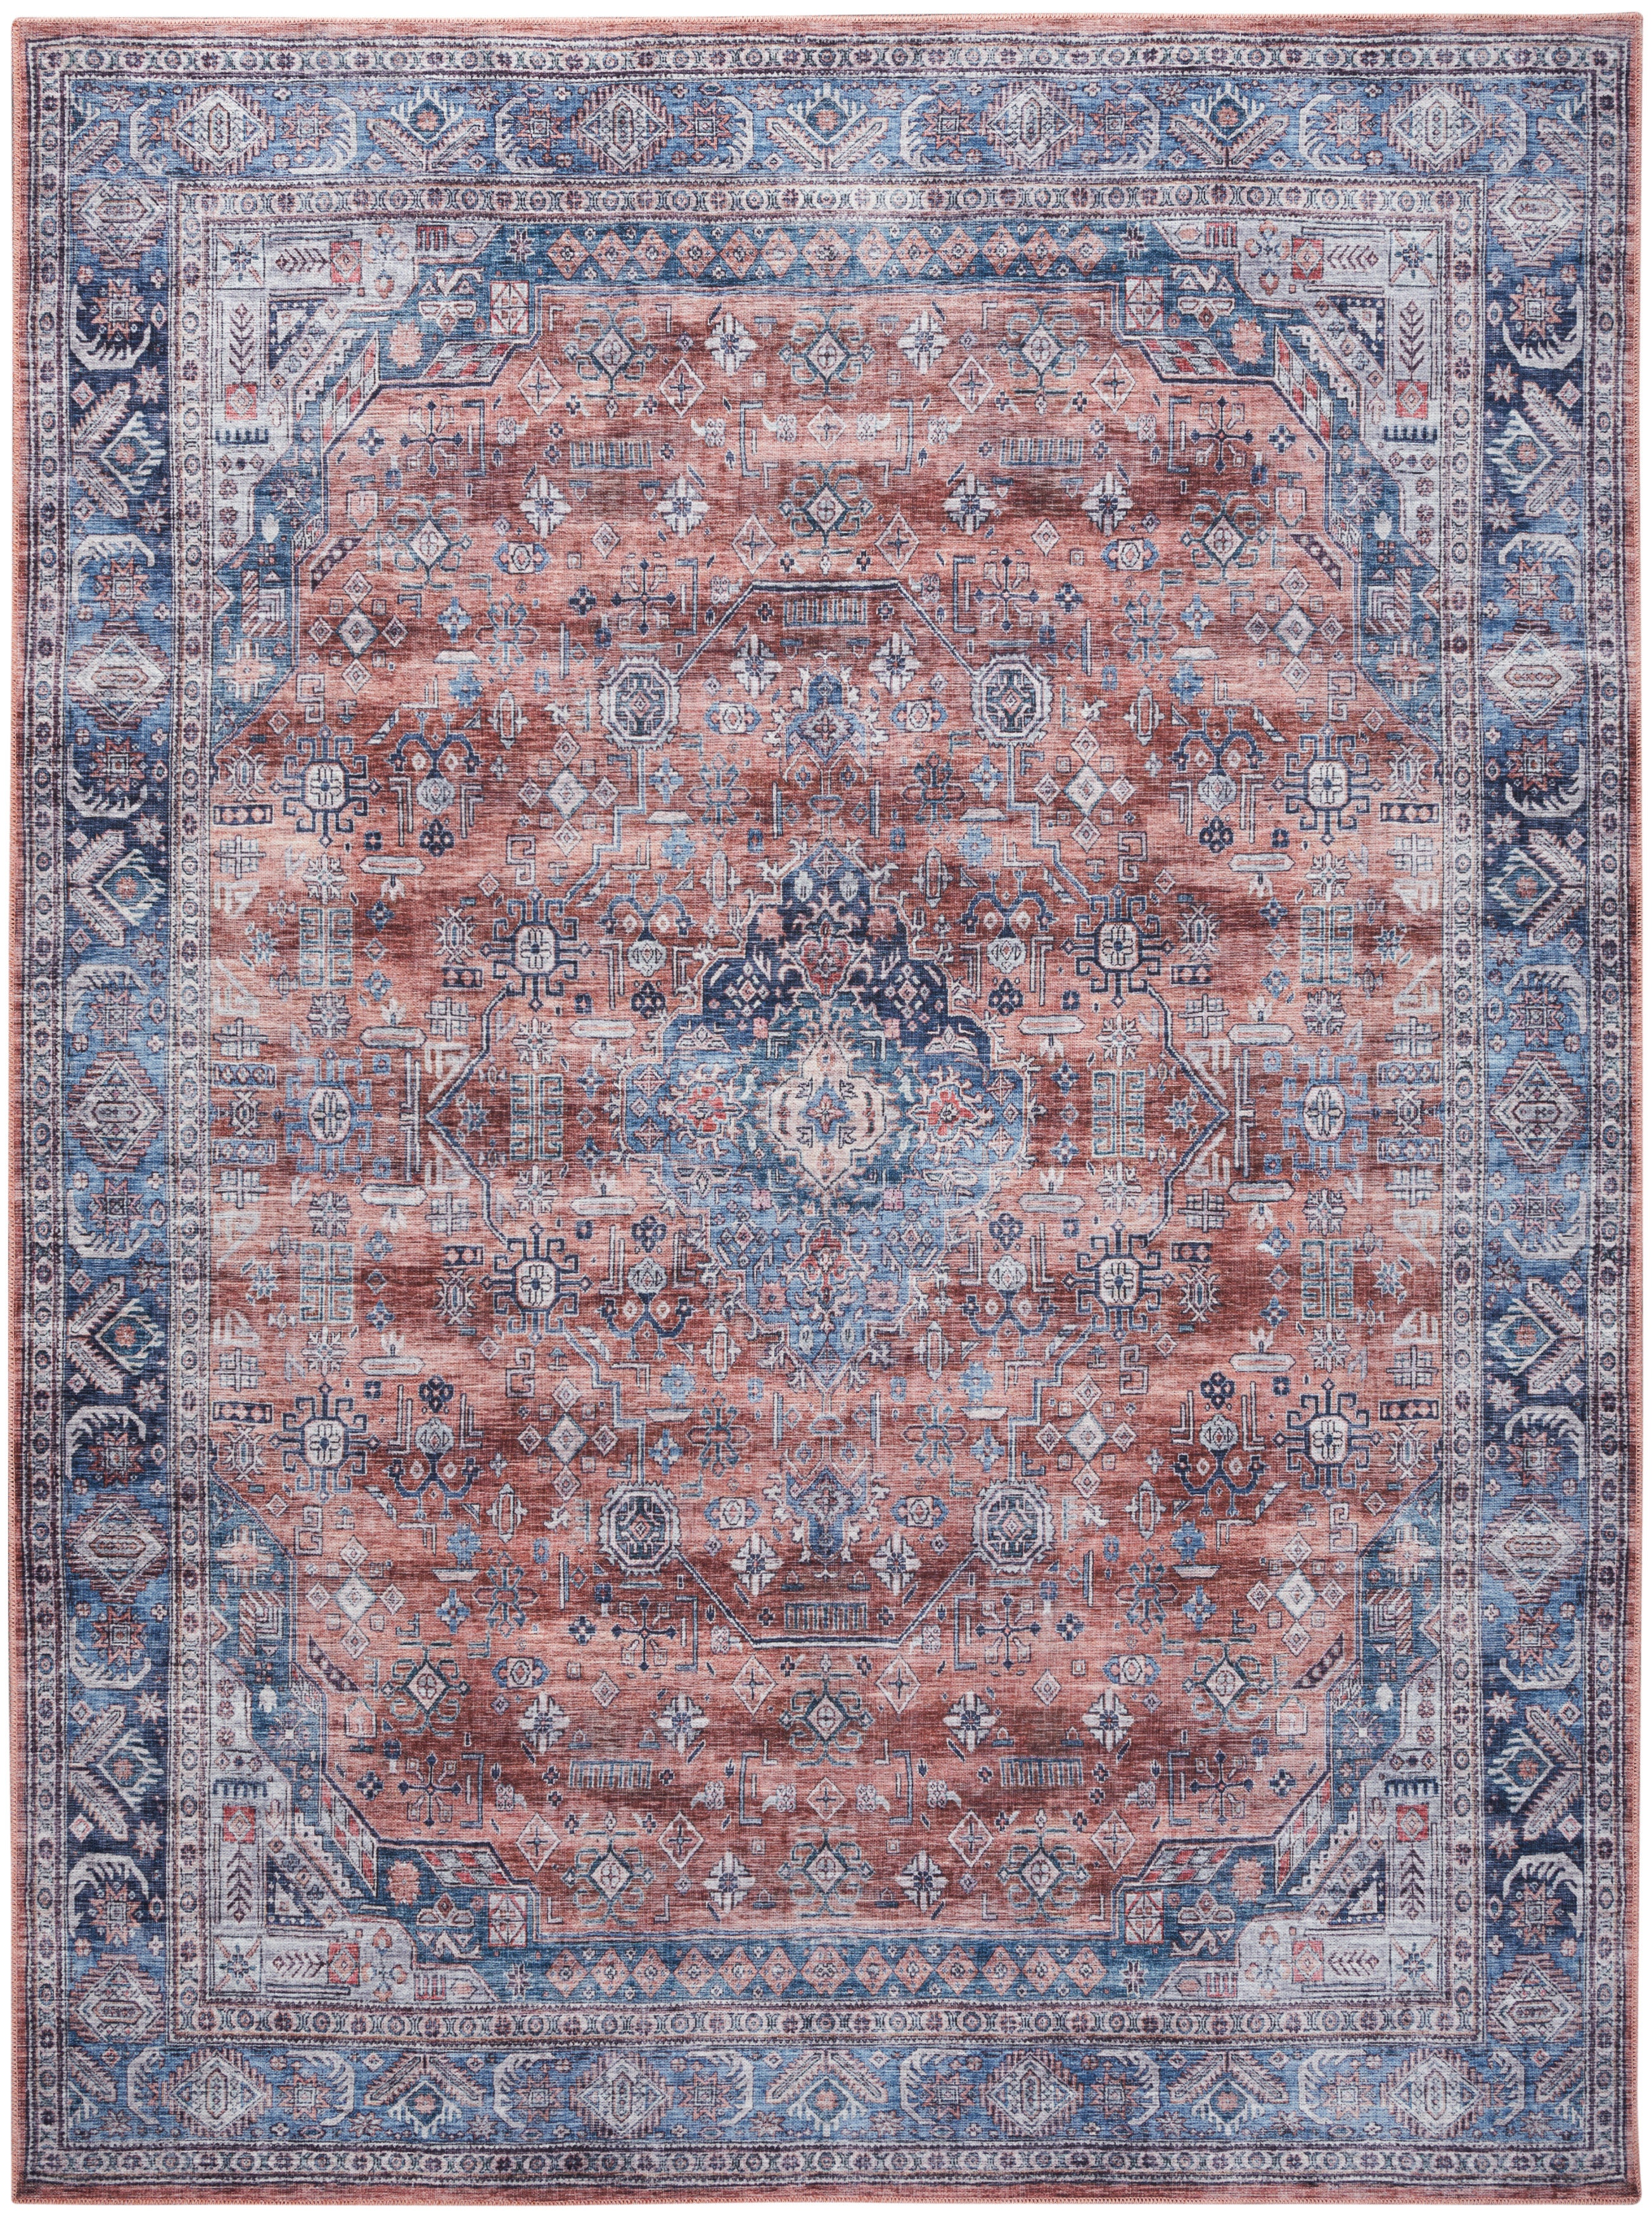 https://visualhunt.com/photos/23/venetia-machine-washable-persian-blue-multicolor-area-rug.jpg